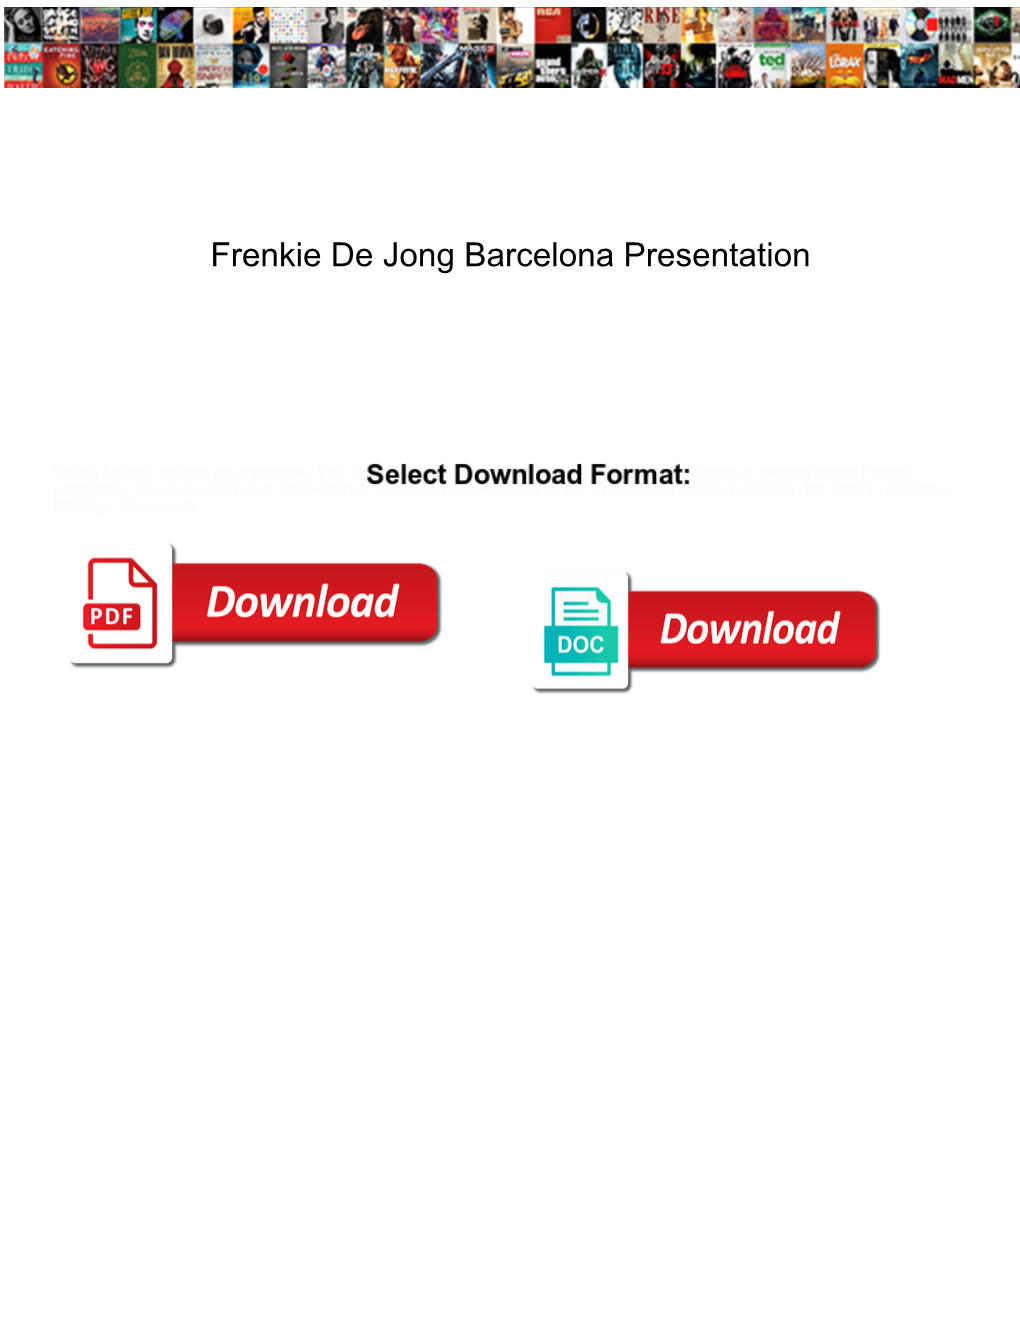 Frenkie De Jong Barcelona Presentation